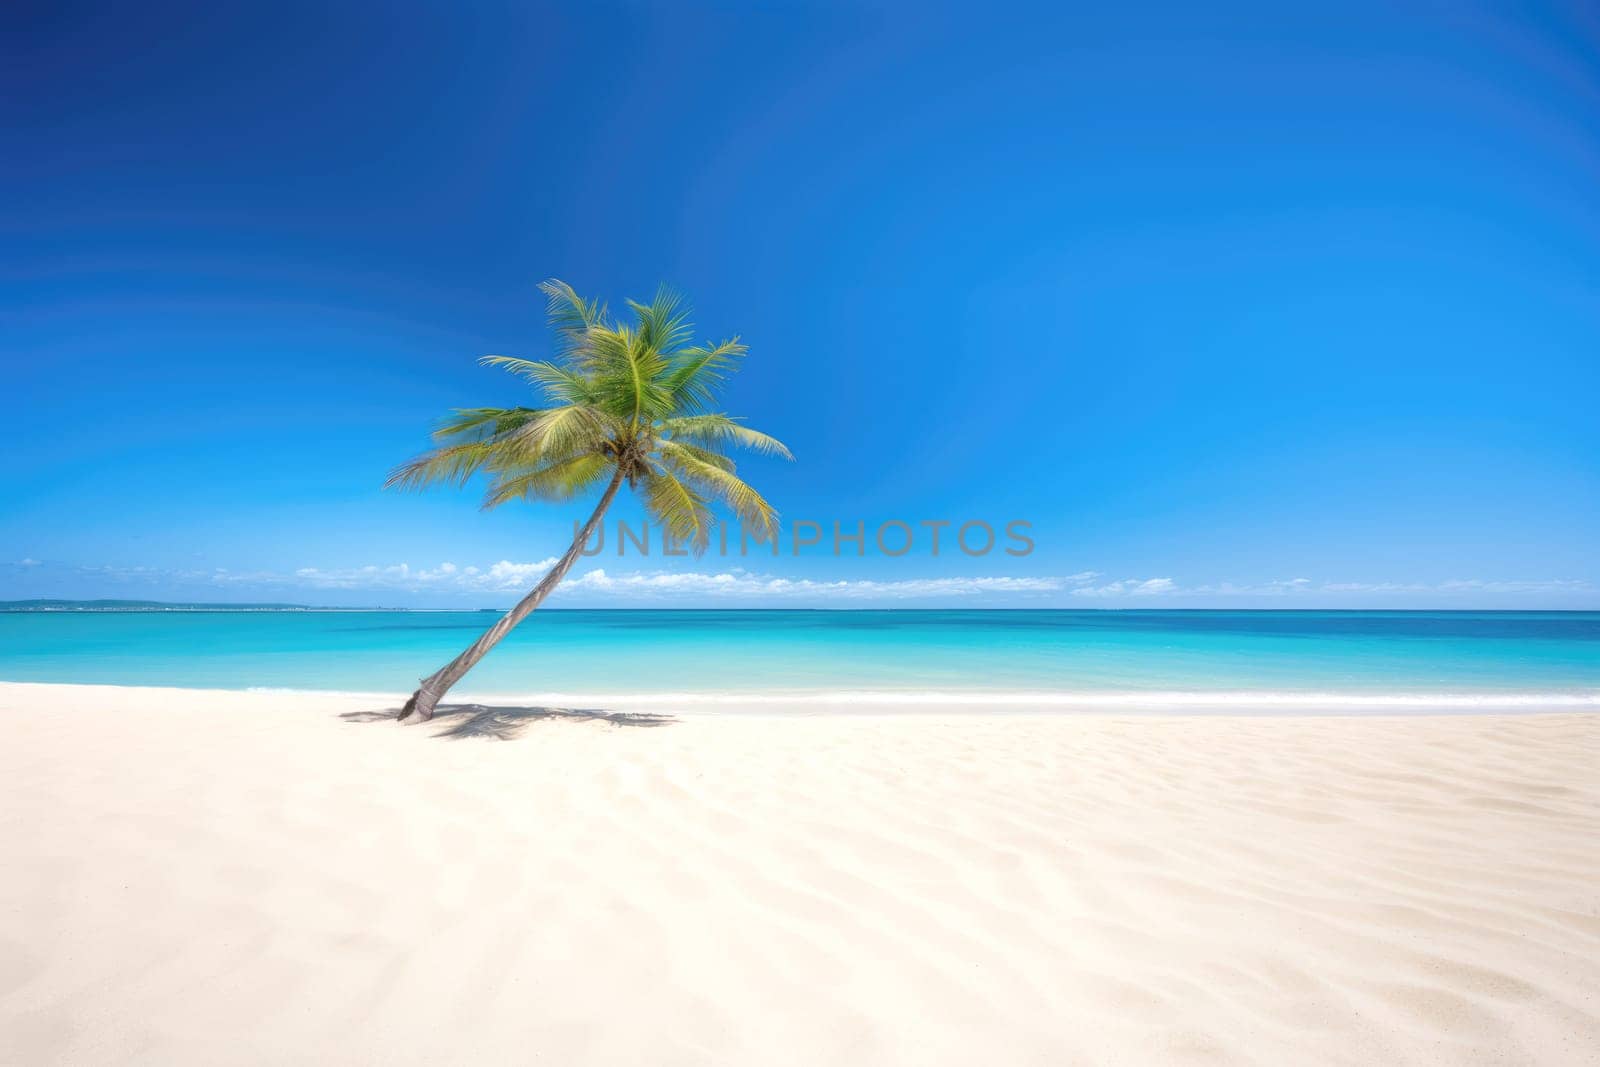 Tropical Beach with Single Palm Tree by ugguggu